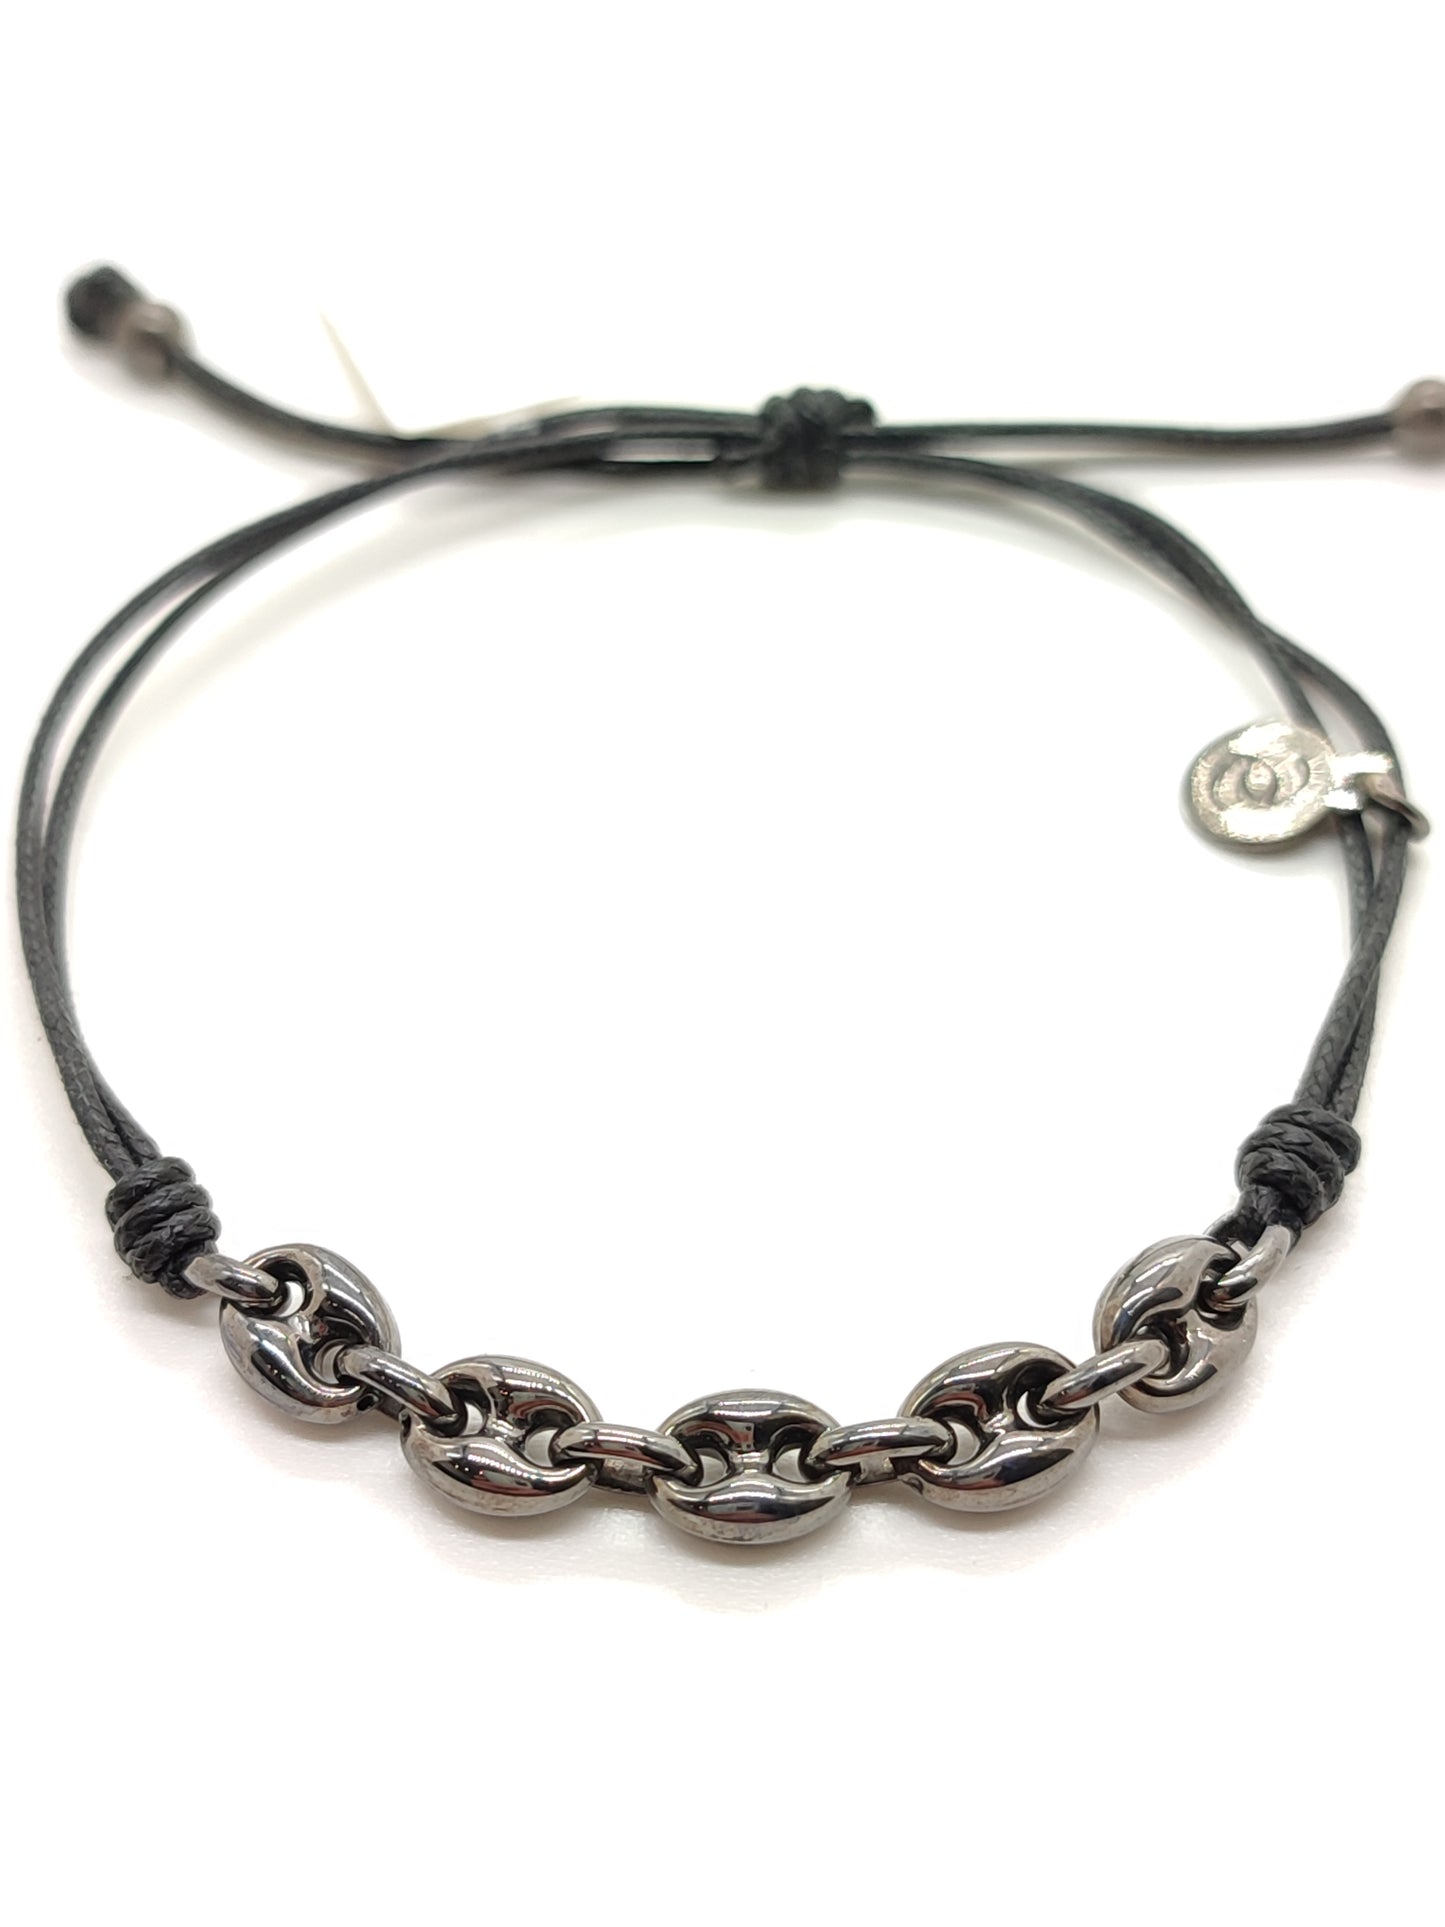 Marine mesh and line bracelet - burnished